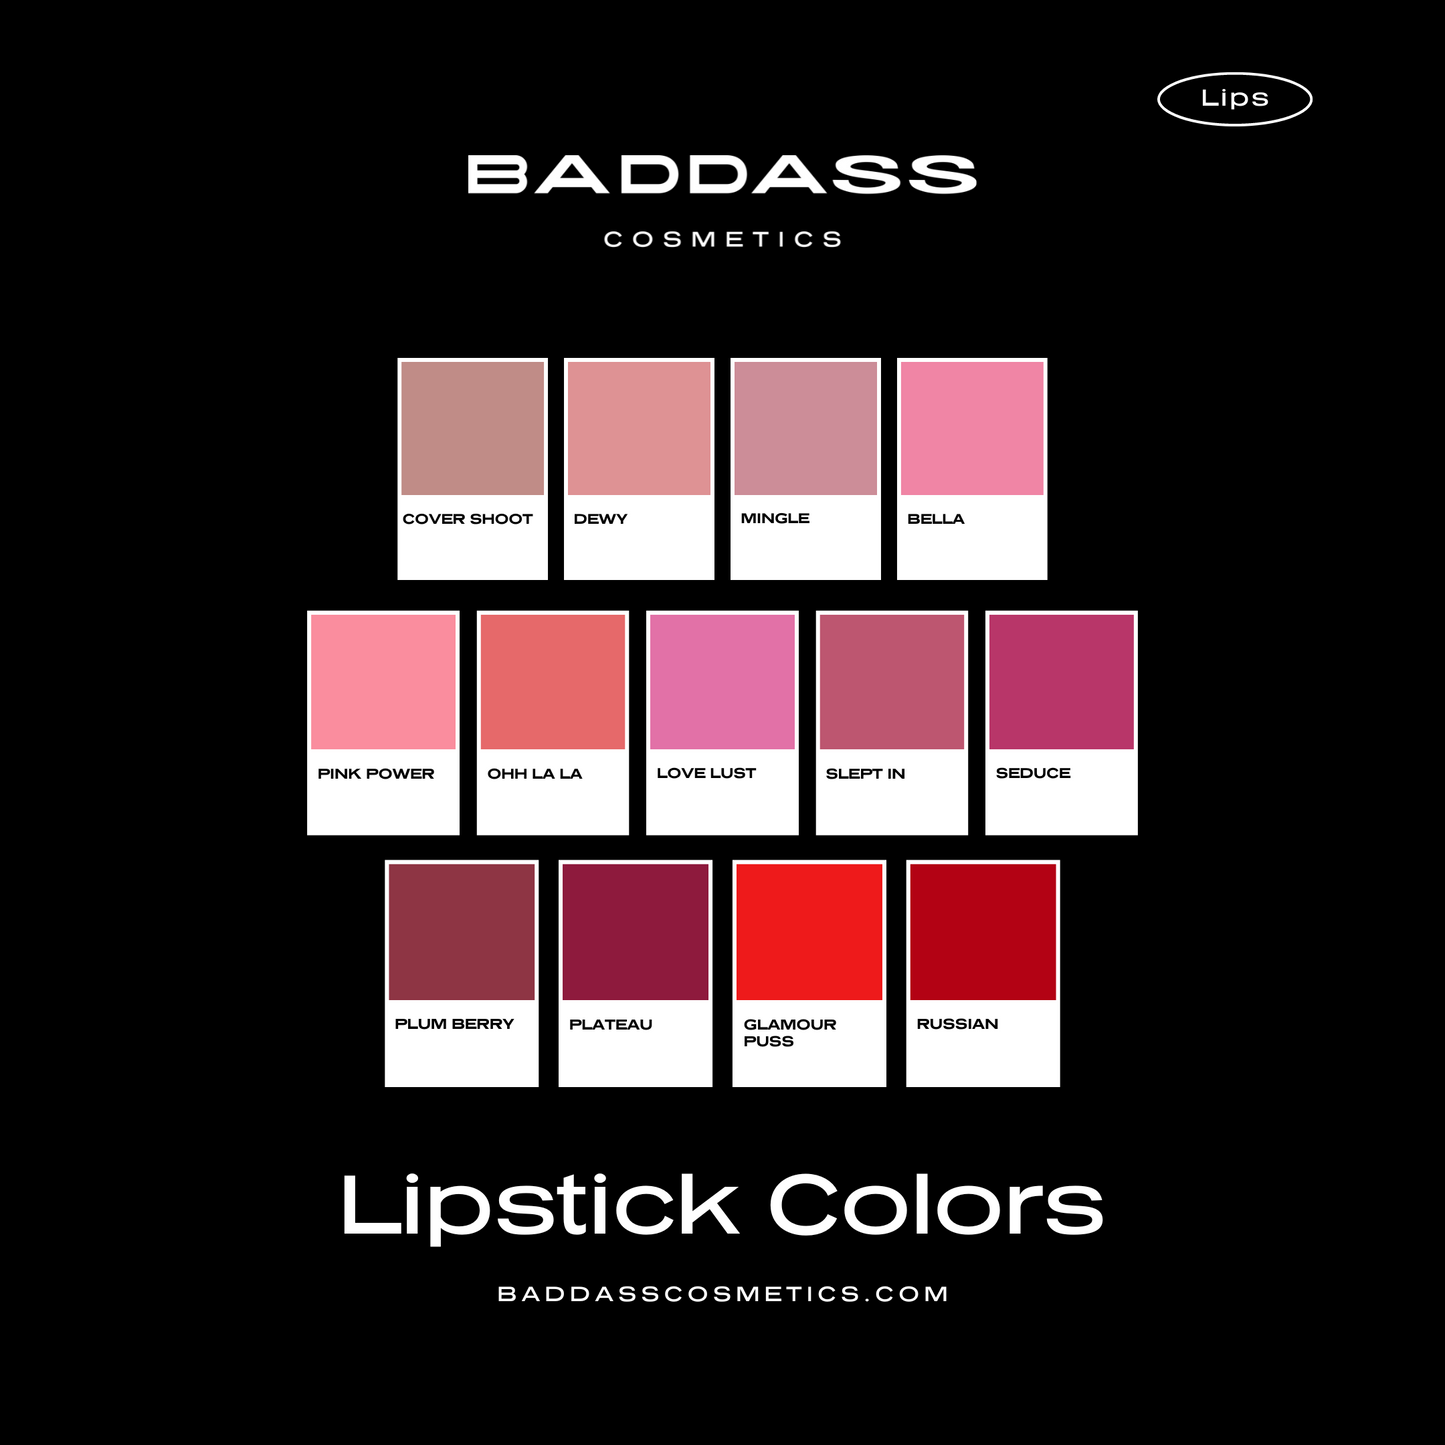 Baddass Lipstick